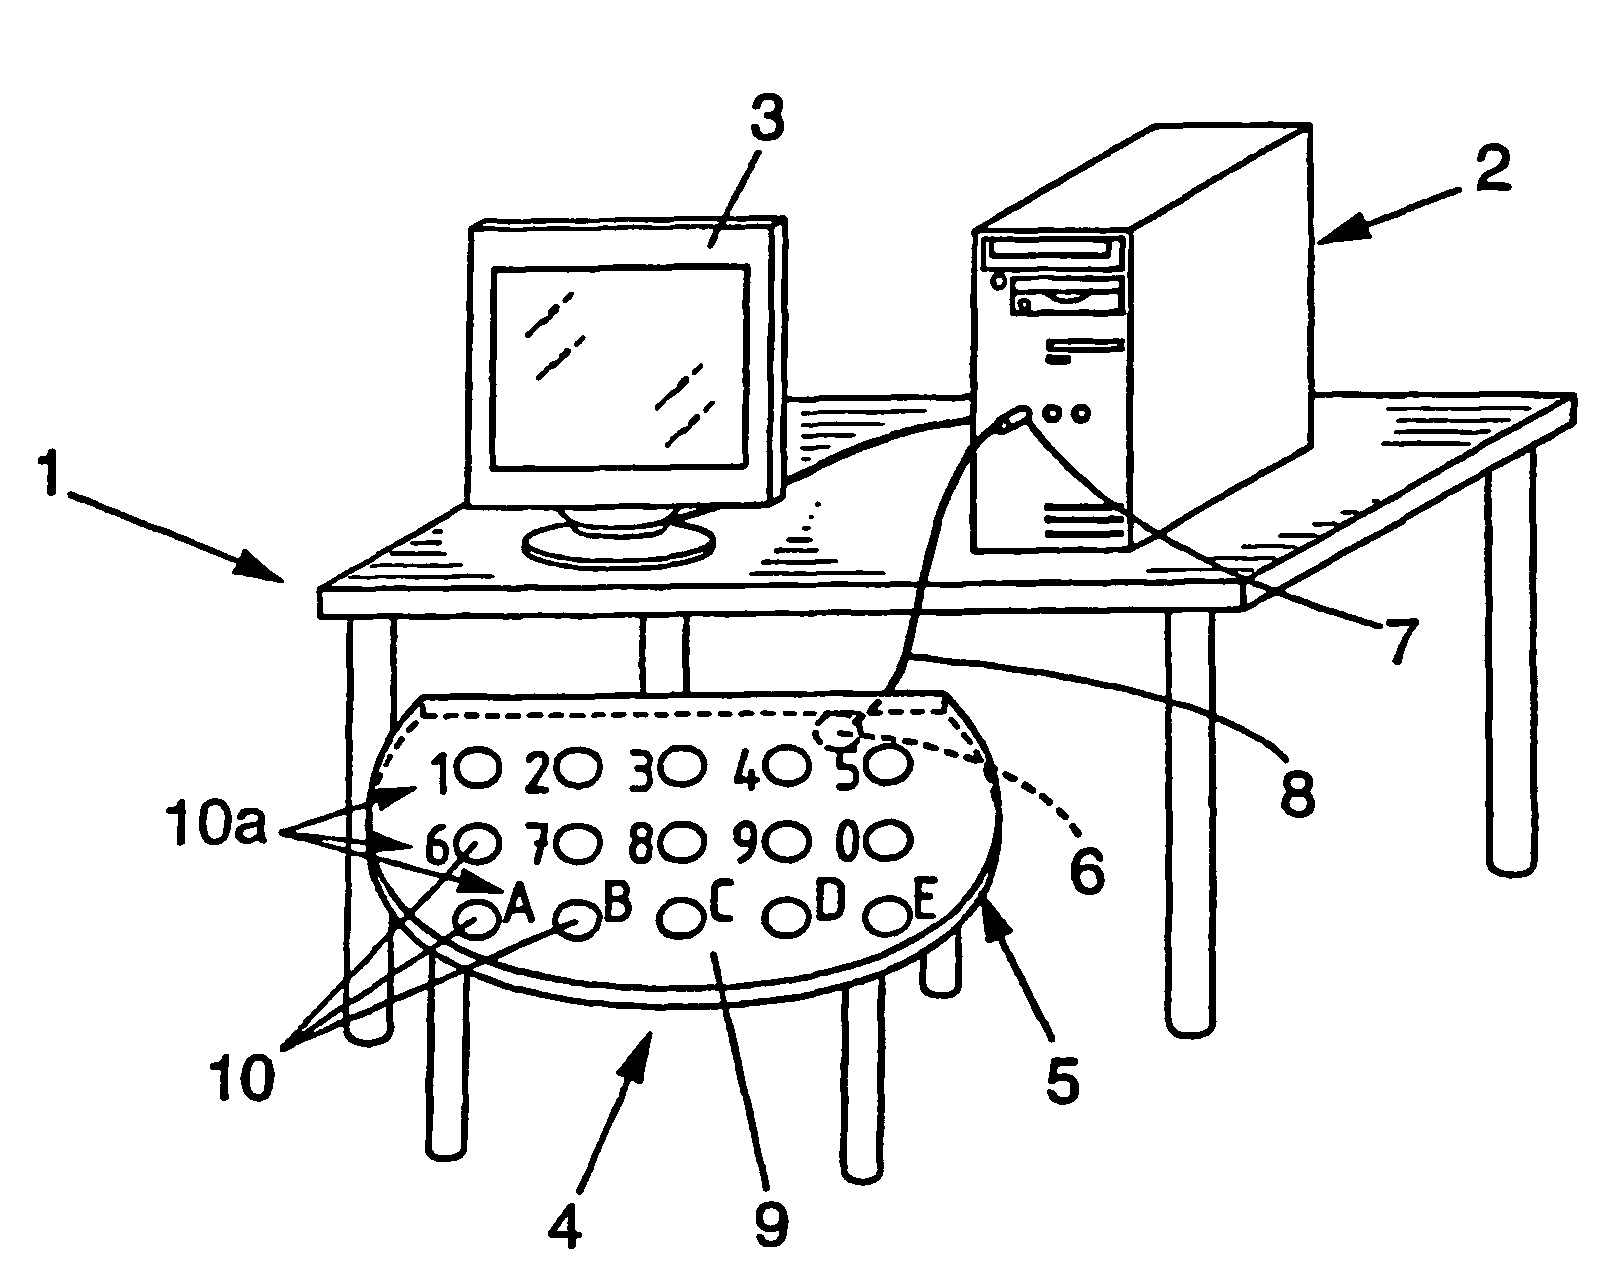 Man-machine interface method and device